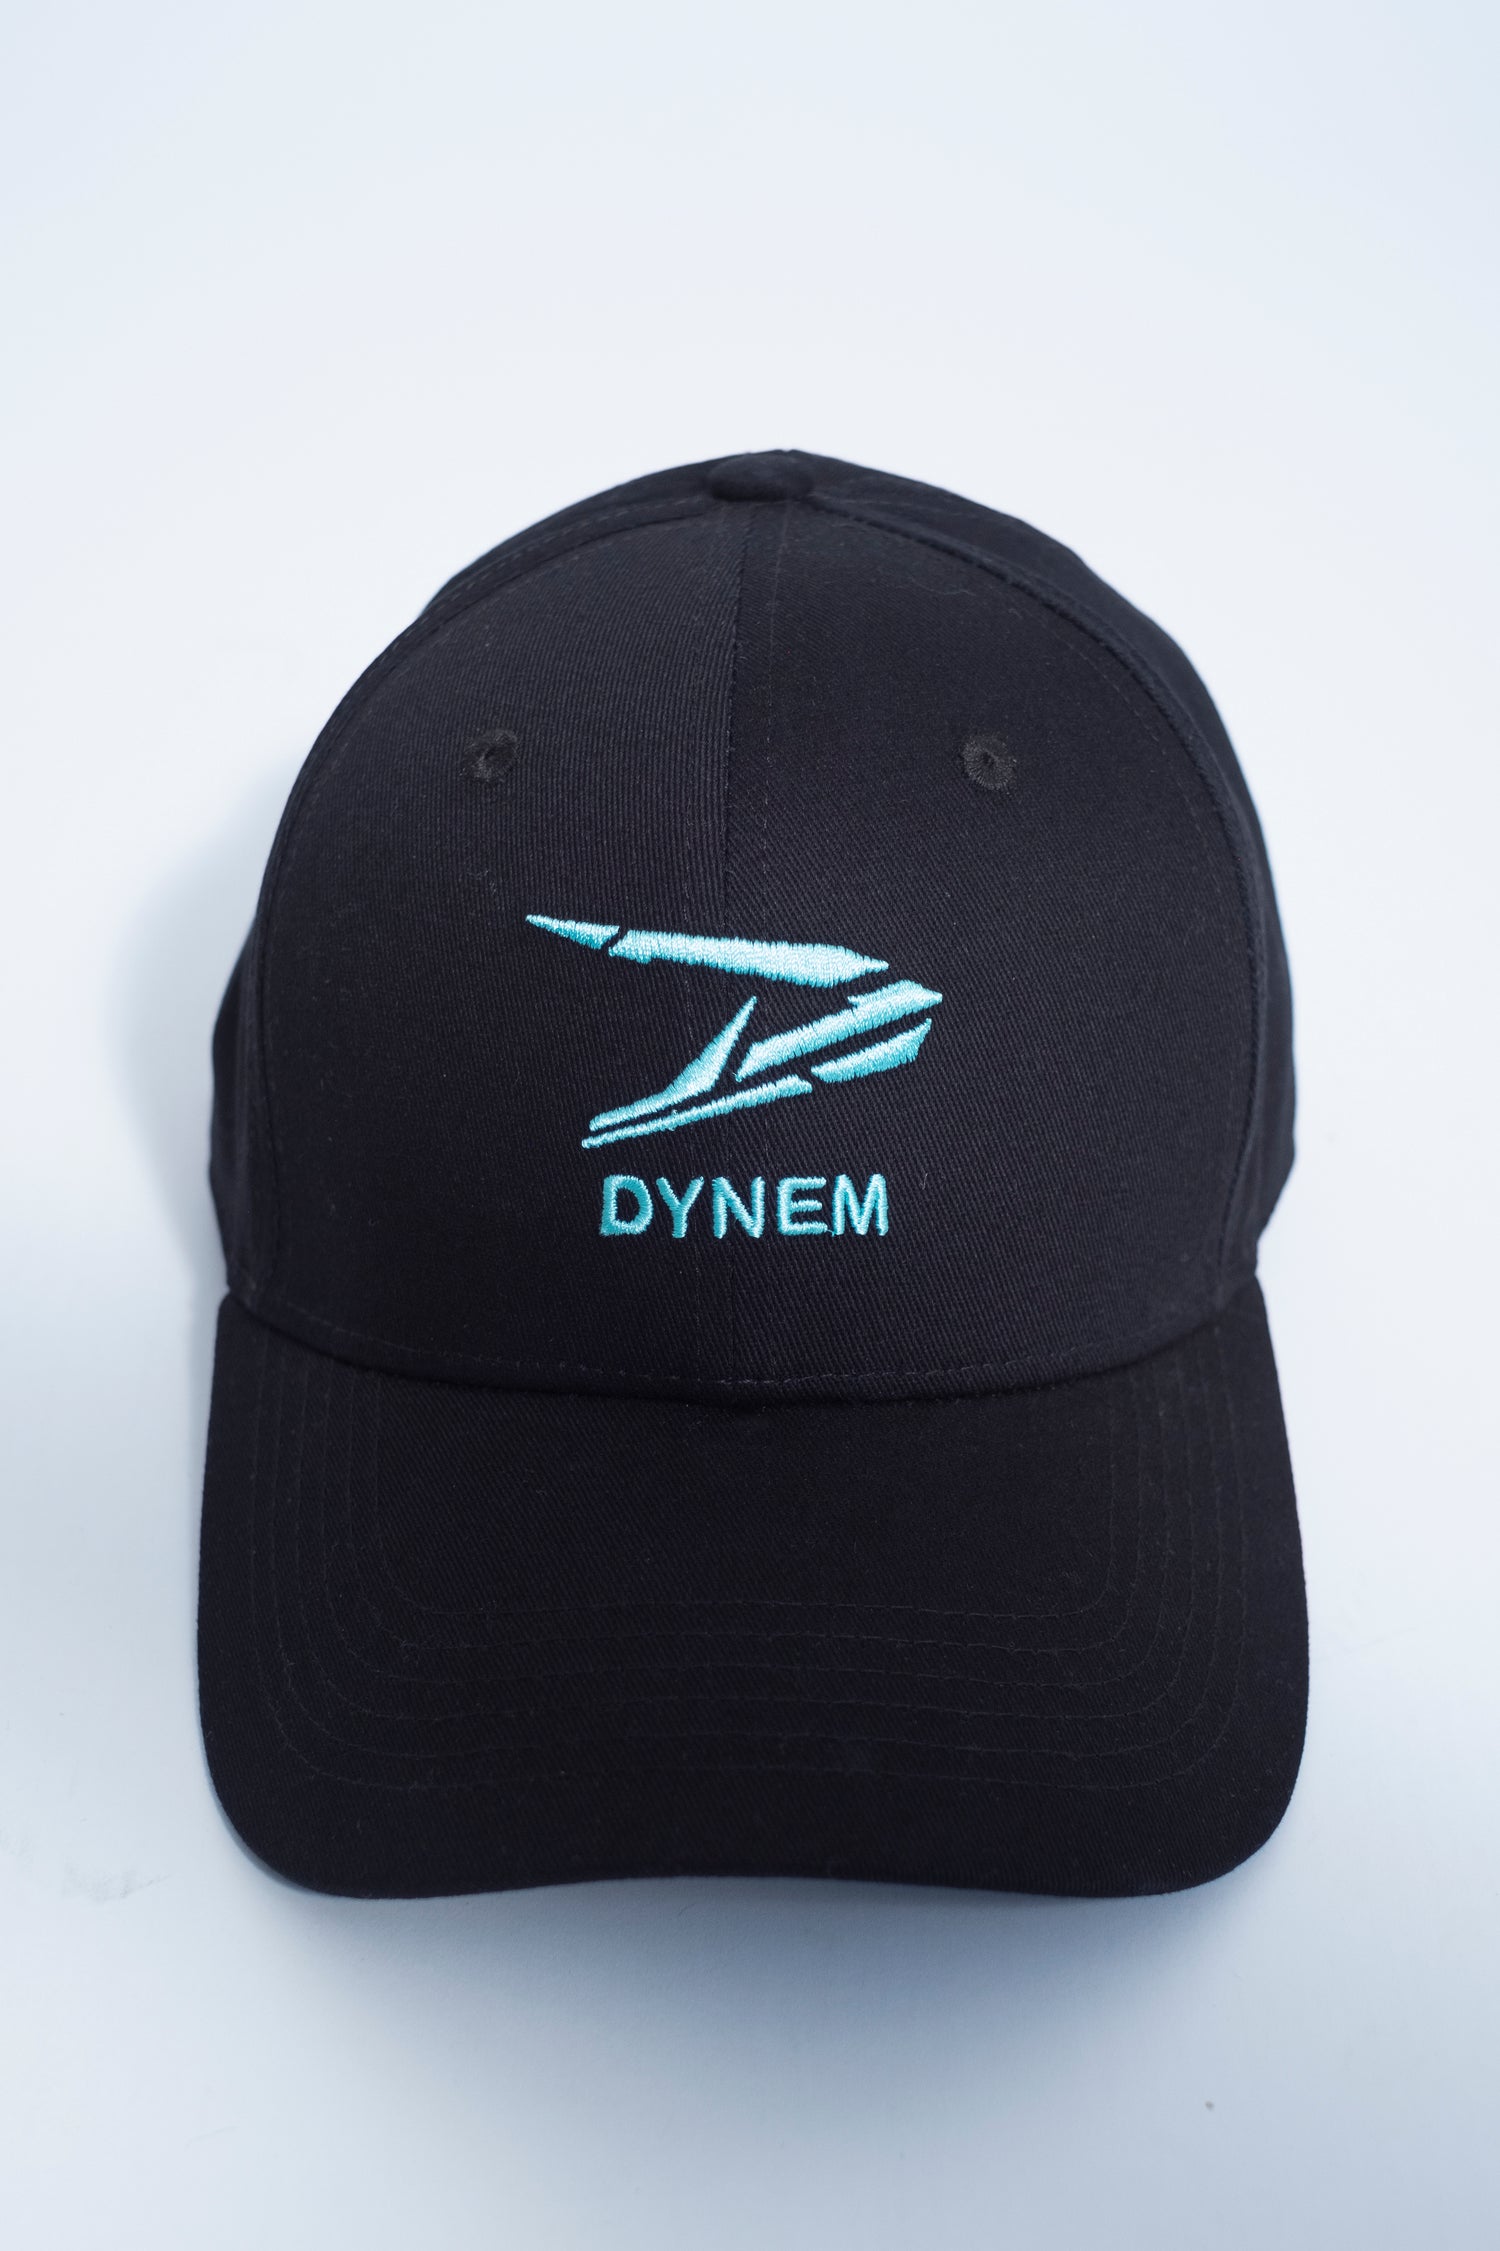 Dynem™ Baseball Cap in Black & Cyan Dynem Brand Logo